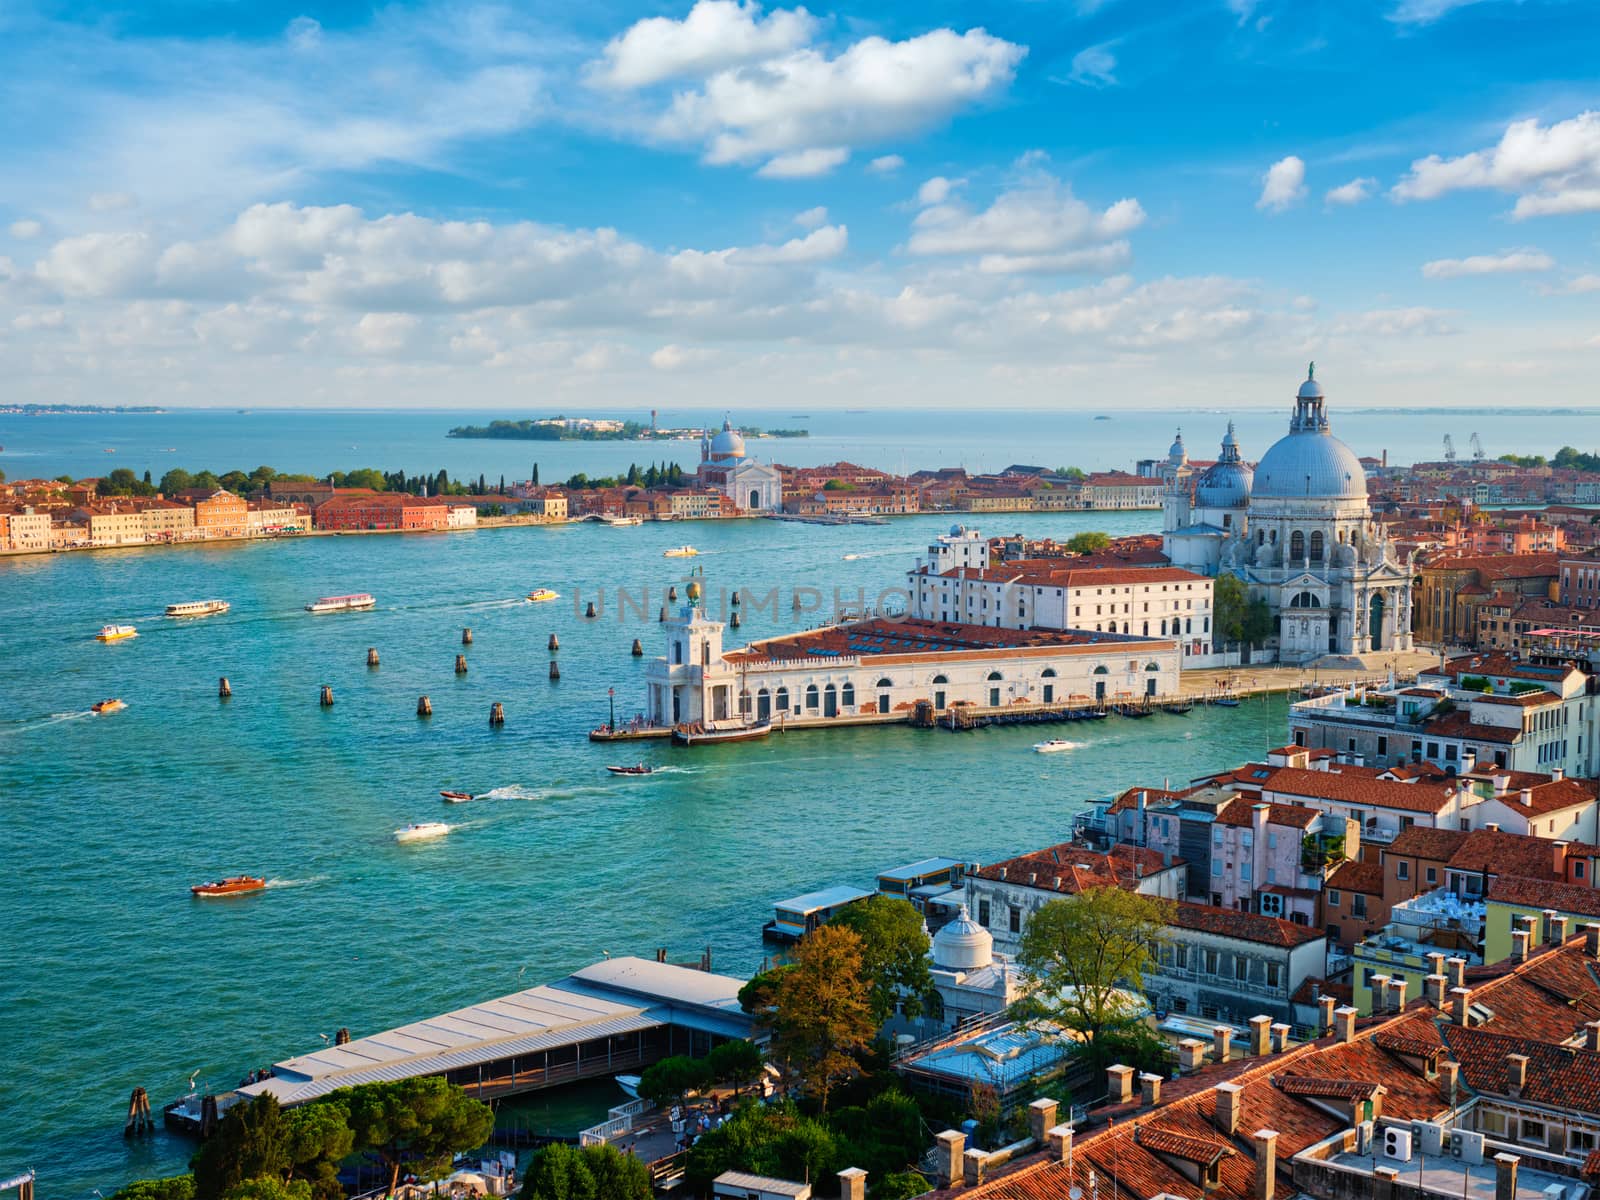 View of Venice lagoon and Santa Maria della Salute church on summer day. Venice, Italy